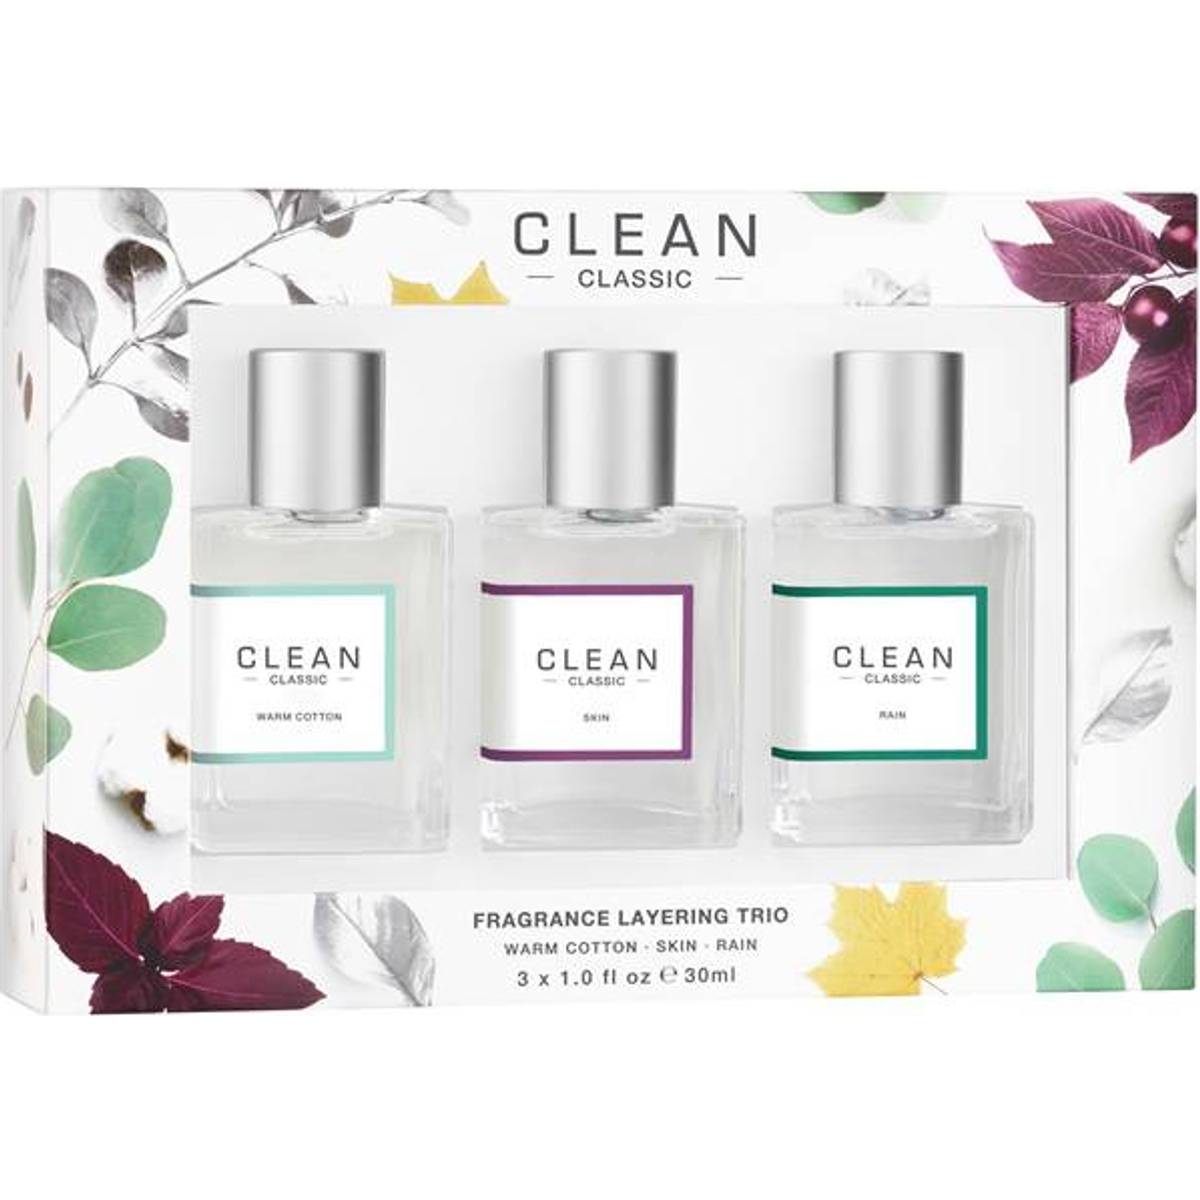 Clean parfym set - Jämför priser på PriceRunner